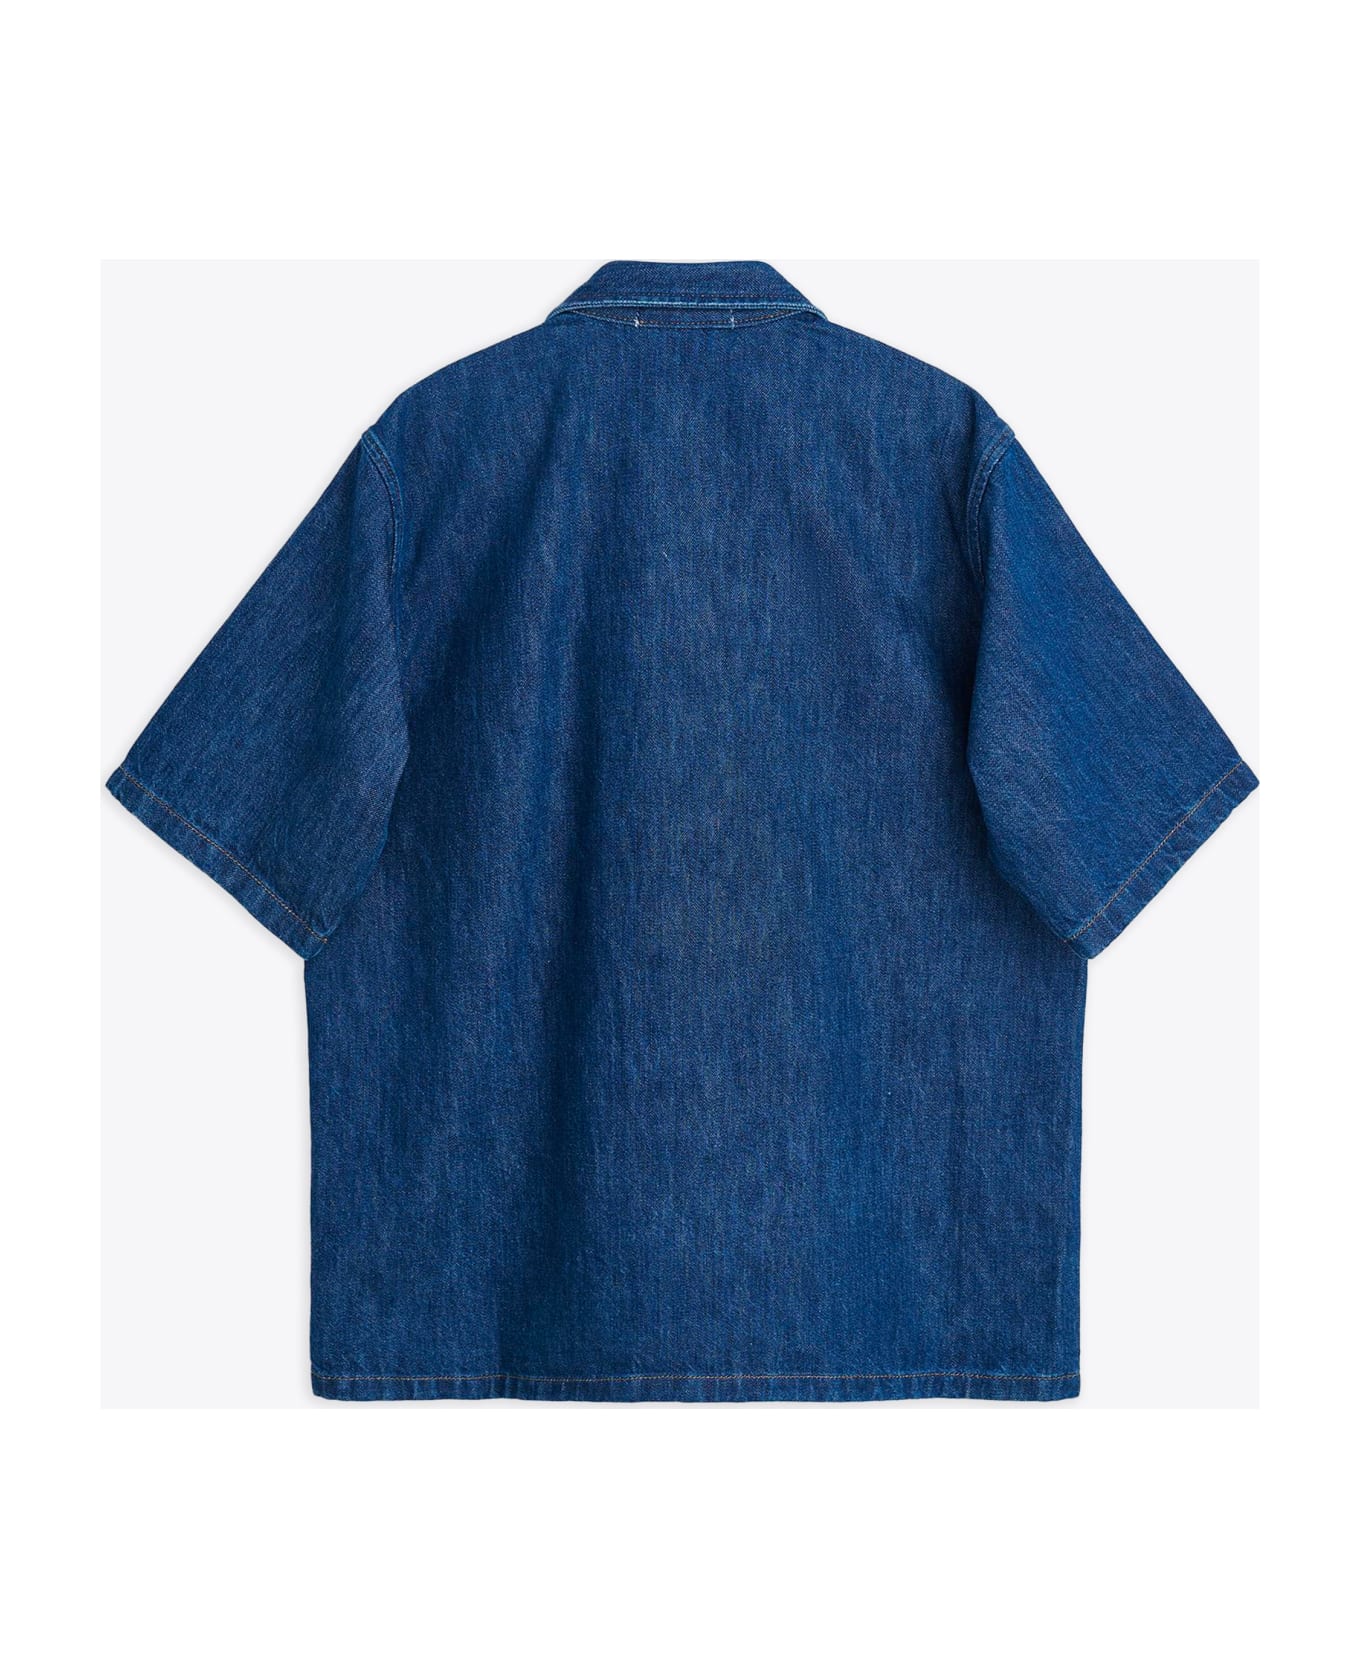 Sunflower #5090 Blue rinse denim shirt with short sleeves - Loose Shirt - Blu